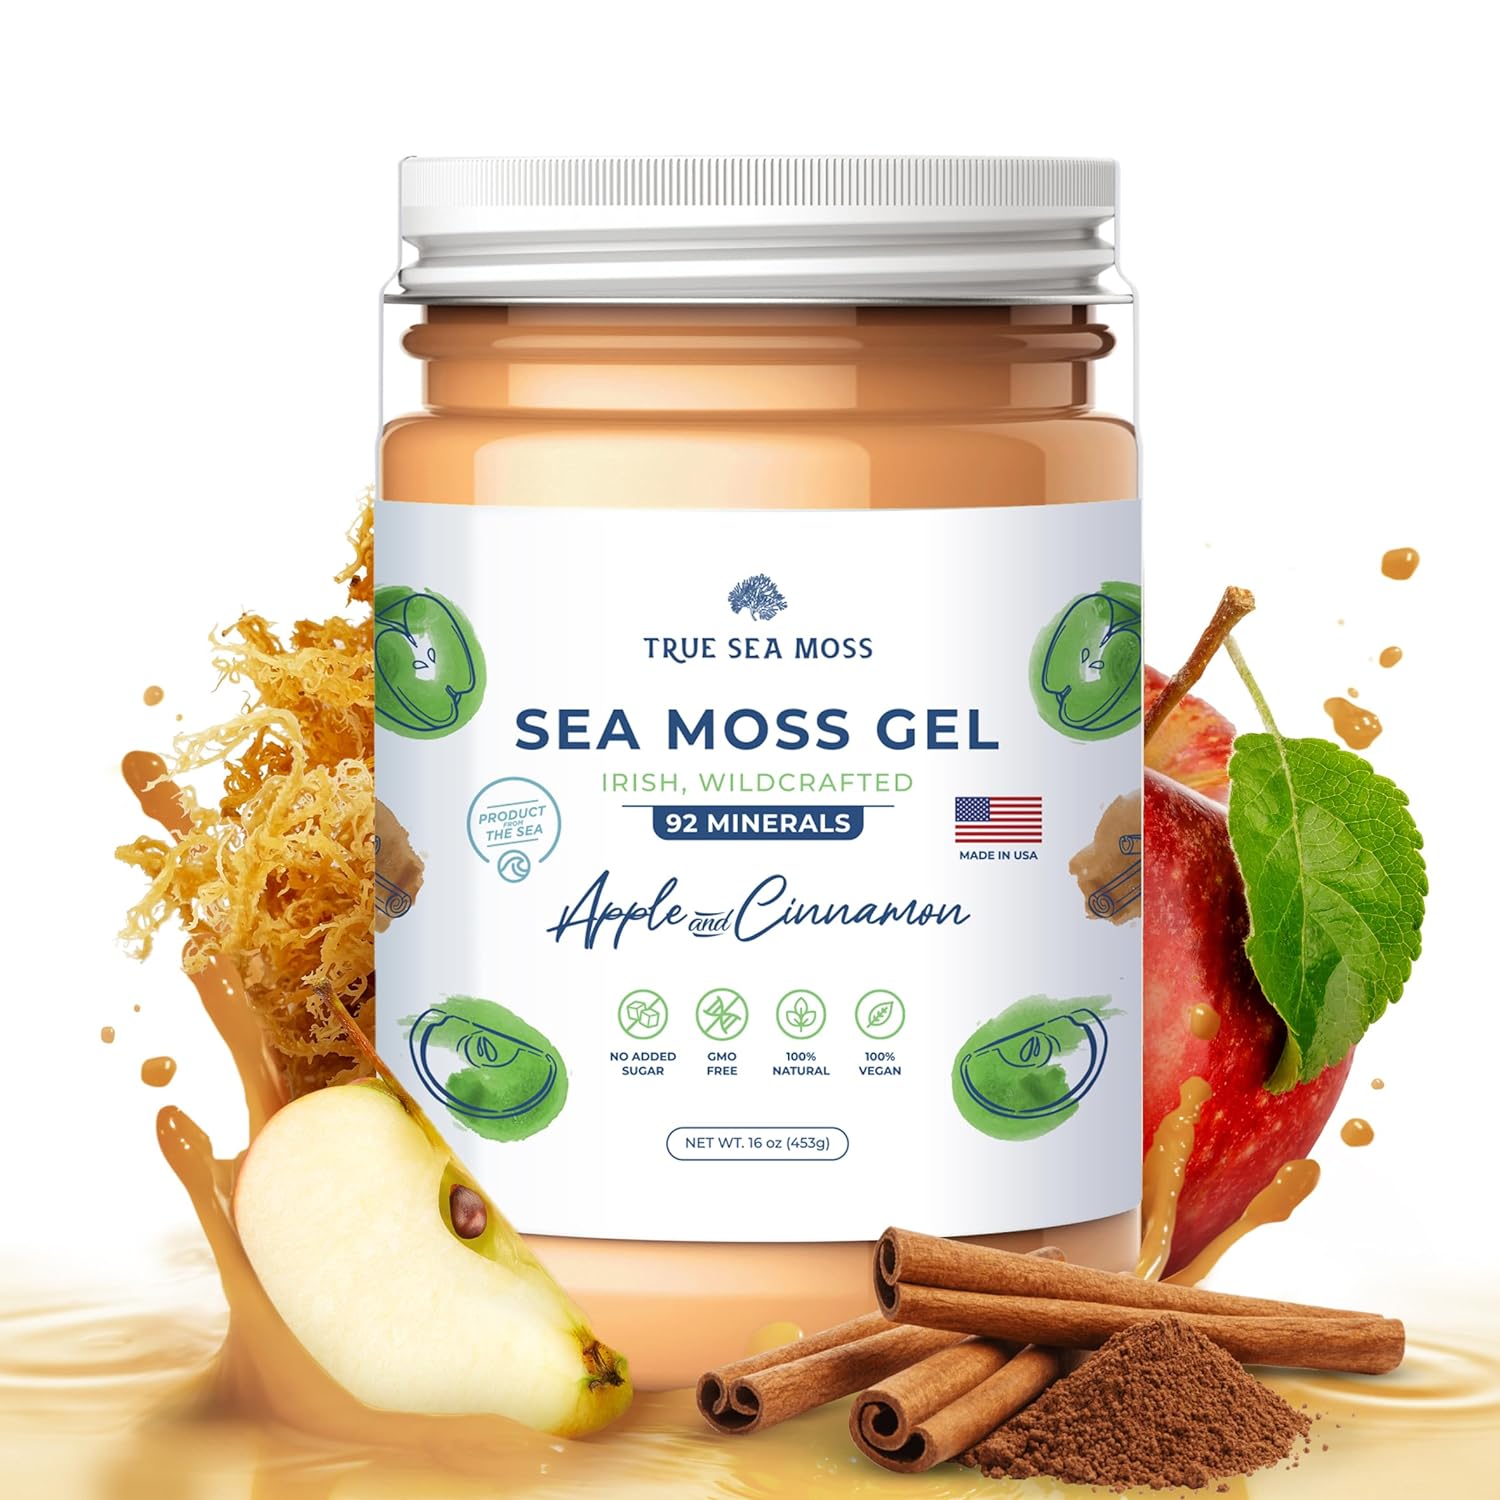 TrueSeaMoss Wildcrafted Irish Sea Moss Gel - Made with Dried Seaweed - Seamoss, Vegan-Friendly, Antioxidant Supports Thyroid & Digestion - Made in USA (Apple/Cinnamon, Pack of 1)